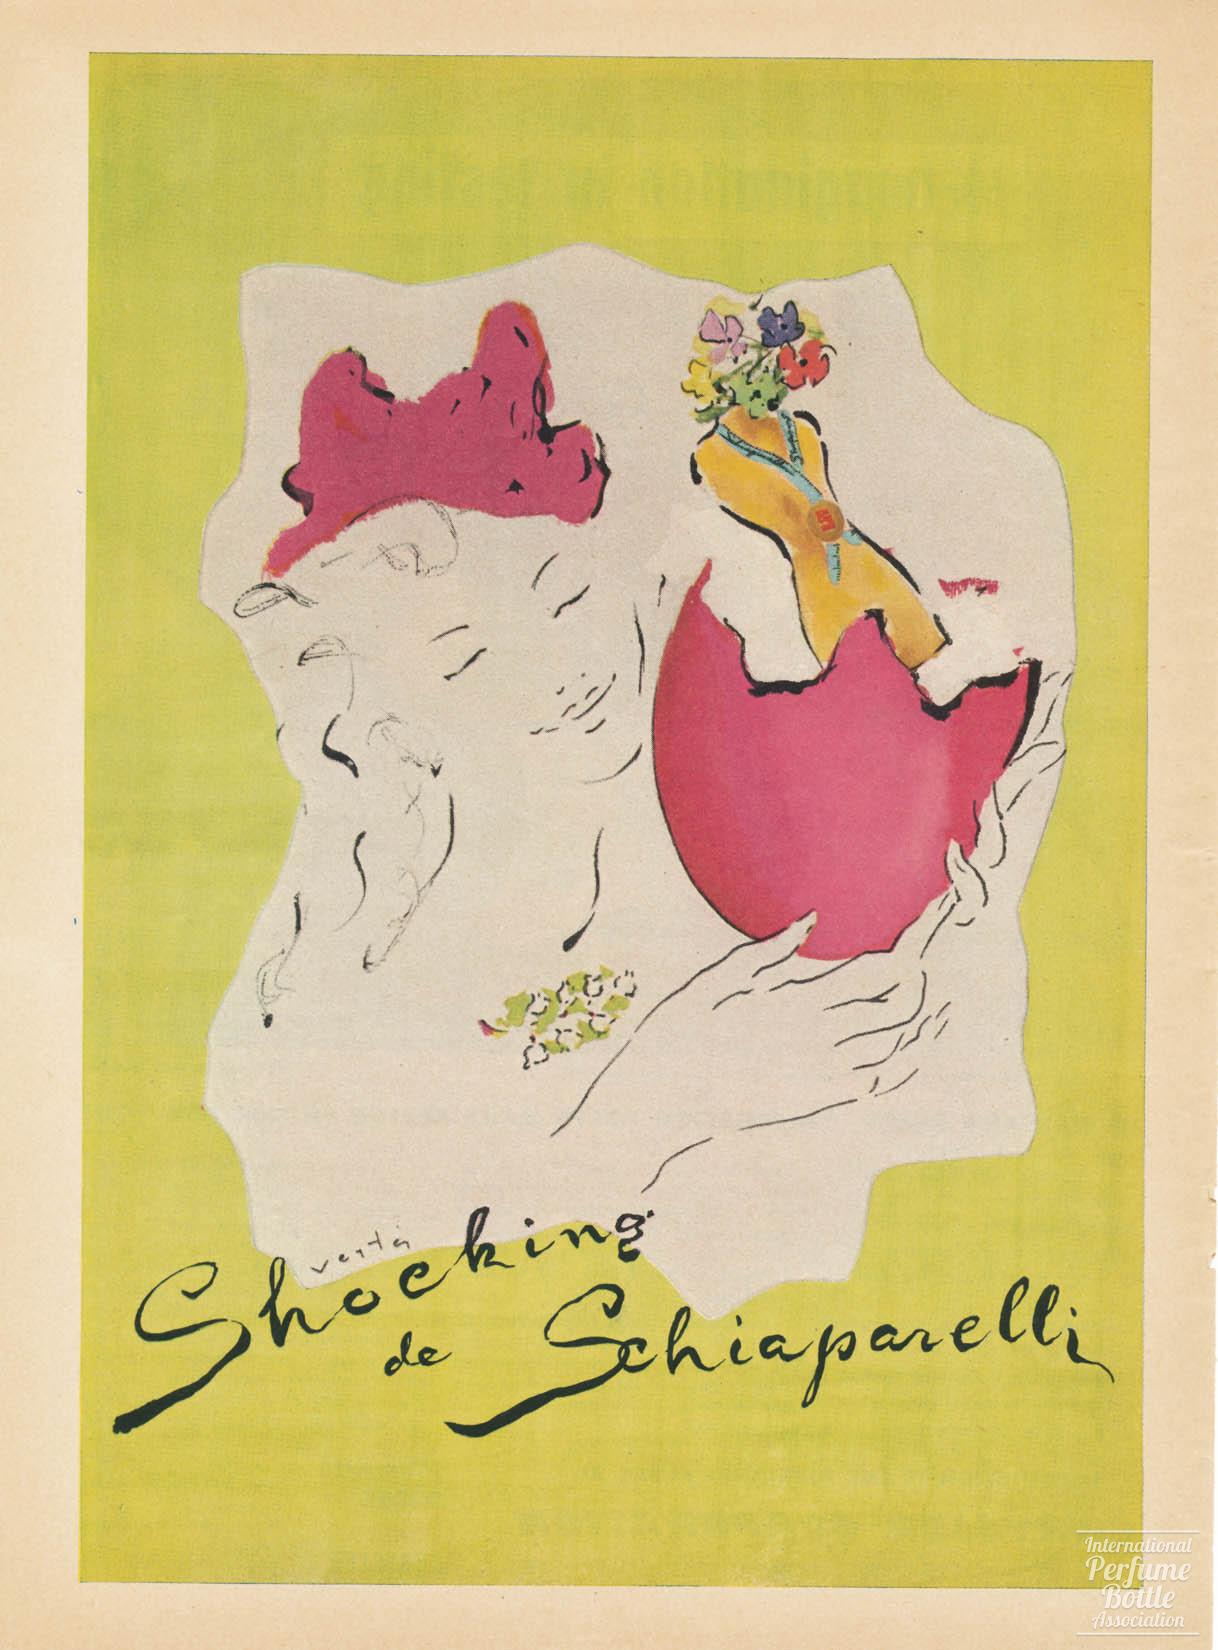 "Shocking" by Schiaparelli Advertisement - 1945